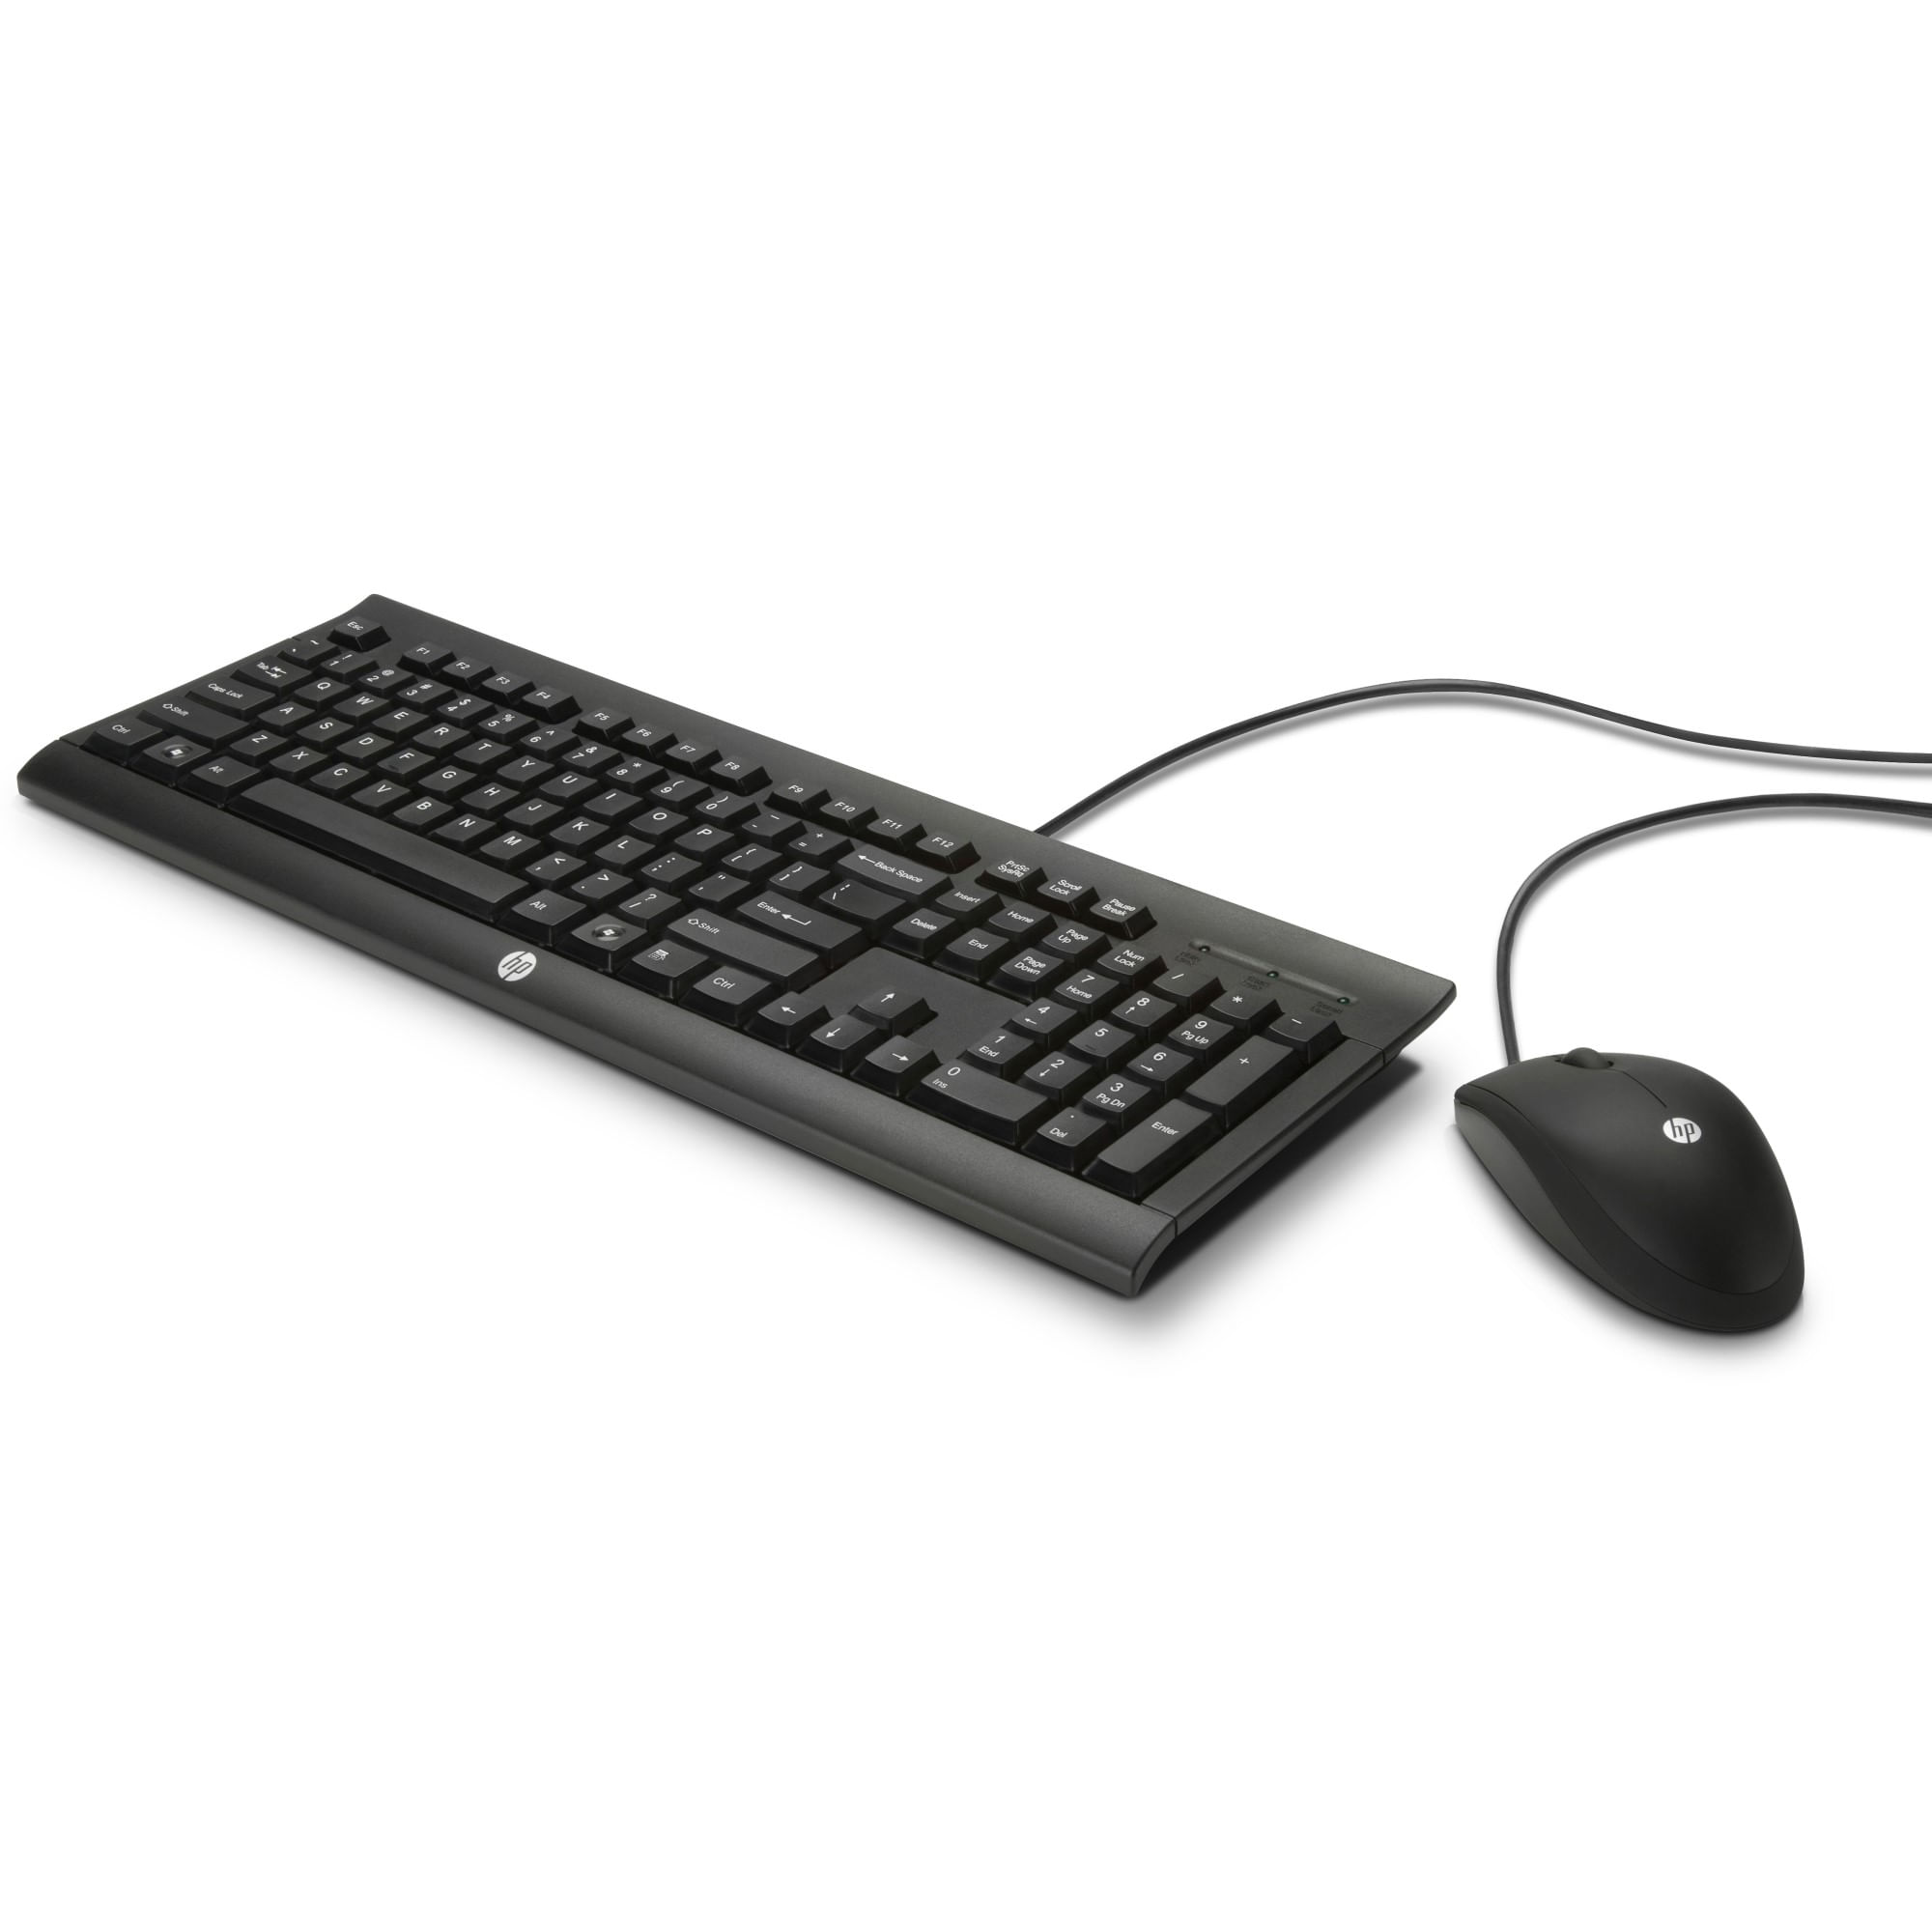 Kit Teclado y Mouse HP C2500 Desktop Latam USB QWERTY - J8F15AA